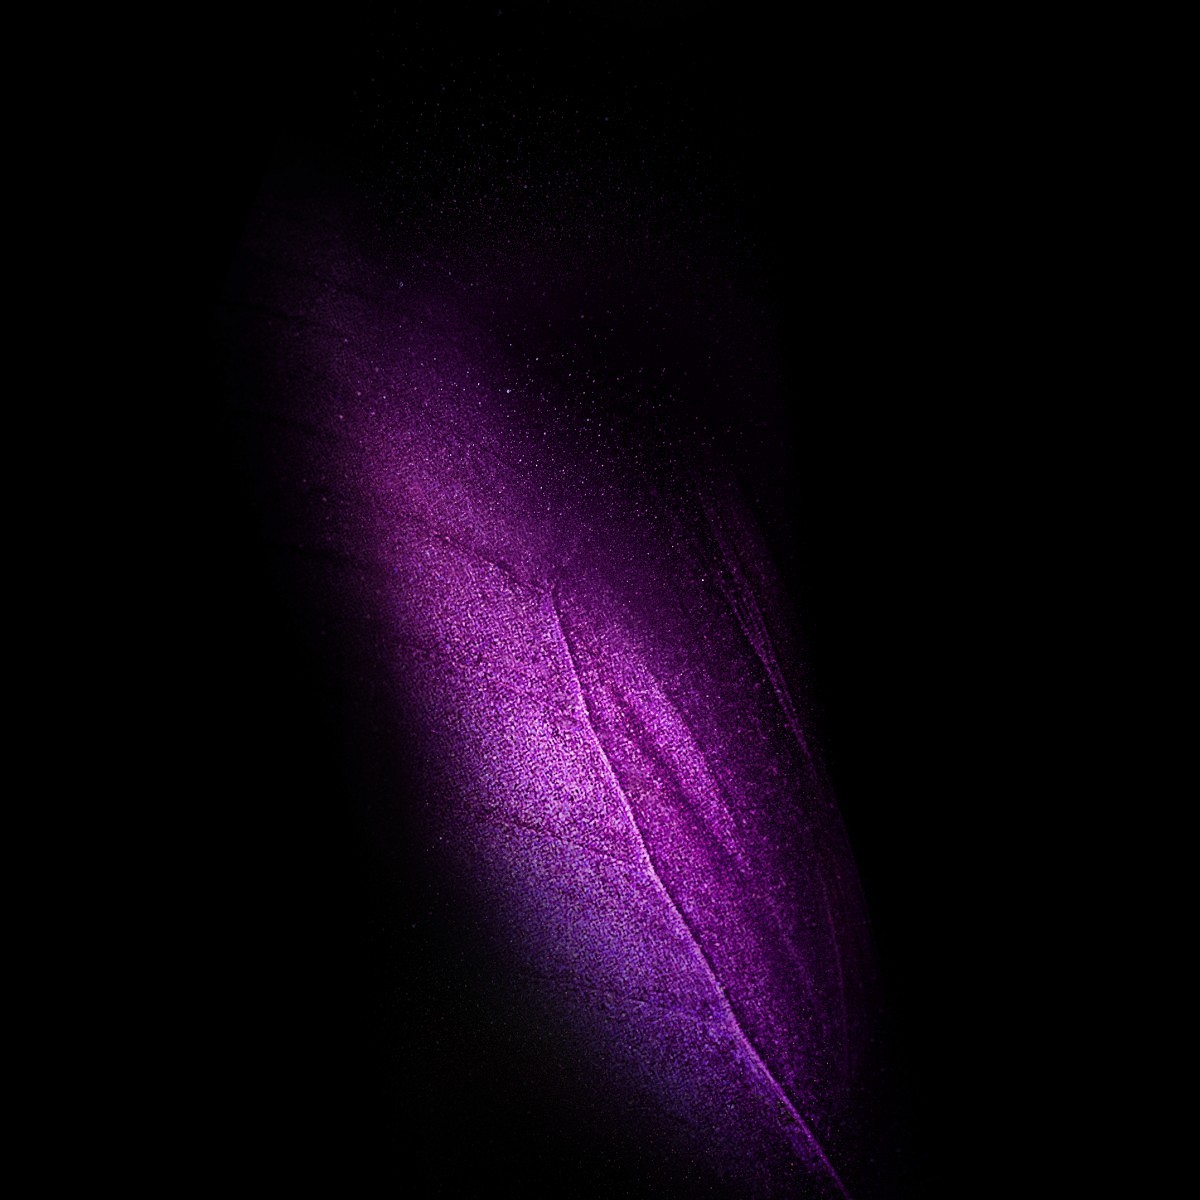 samsung standard wallpaper,violett,lila,schwarz,dunkelheit,licht